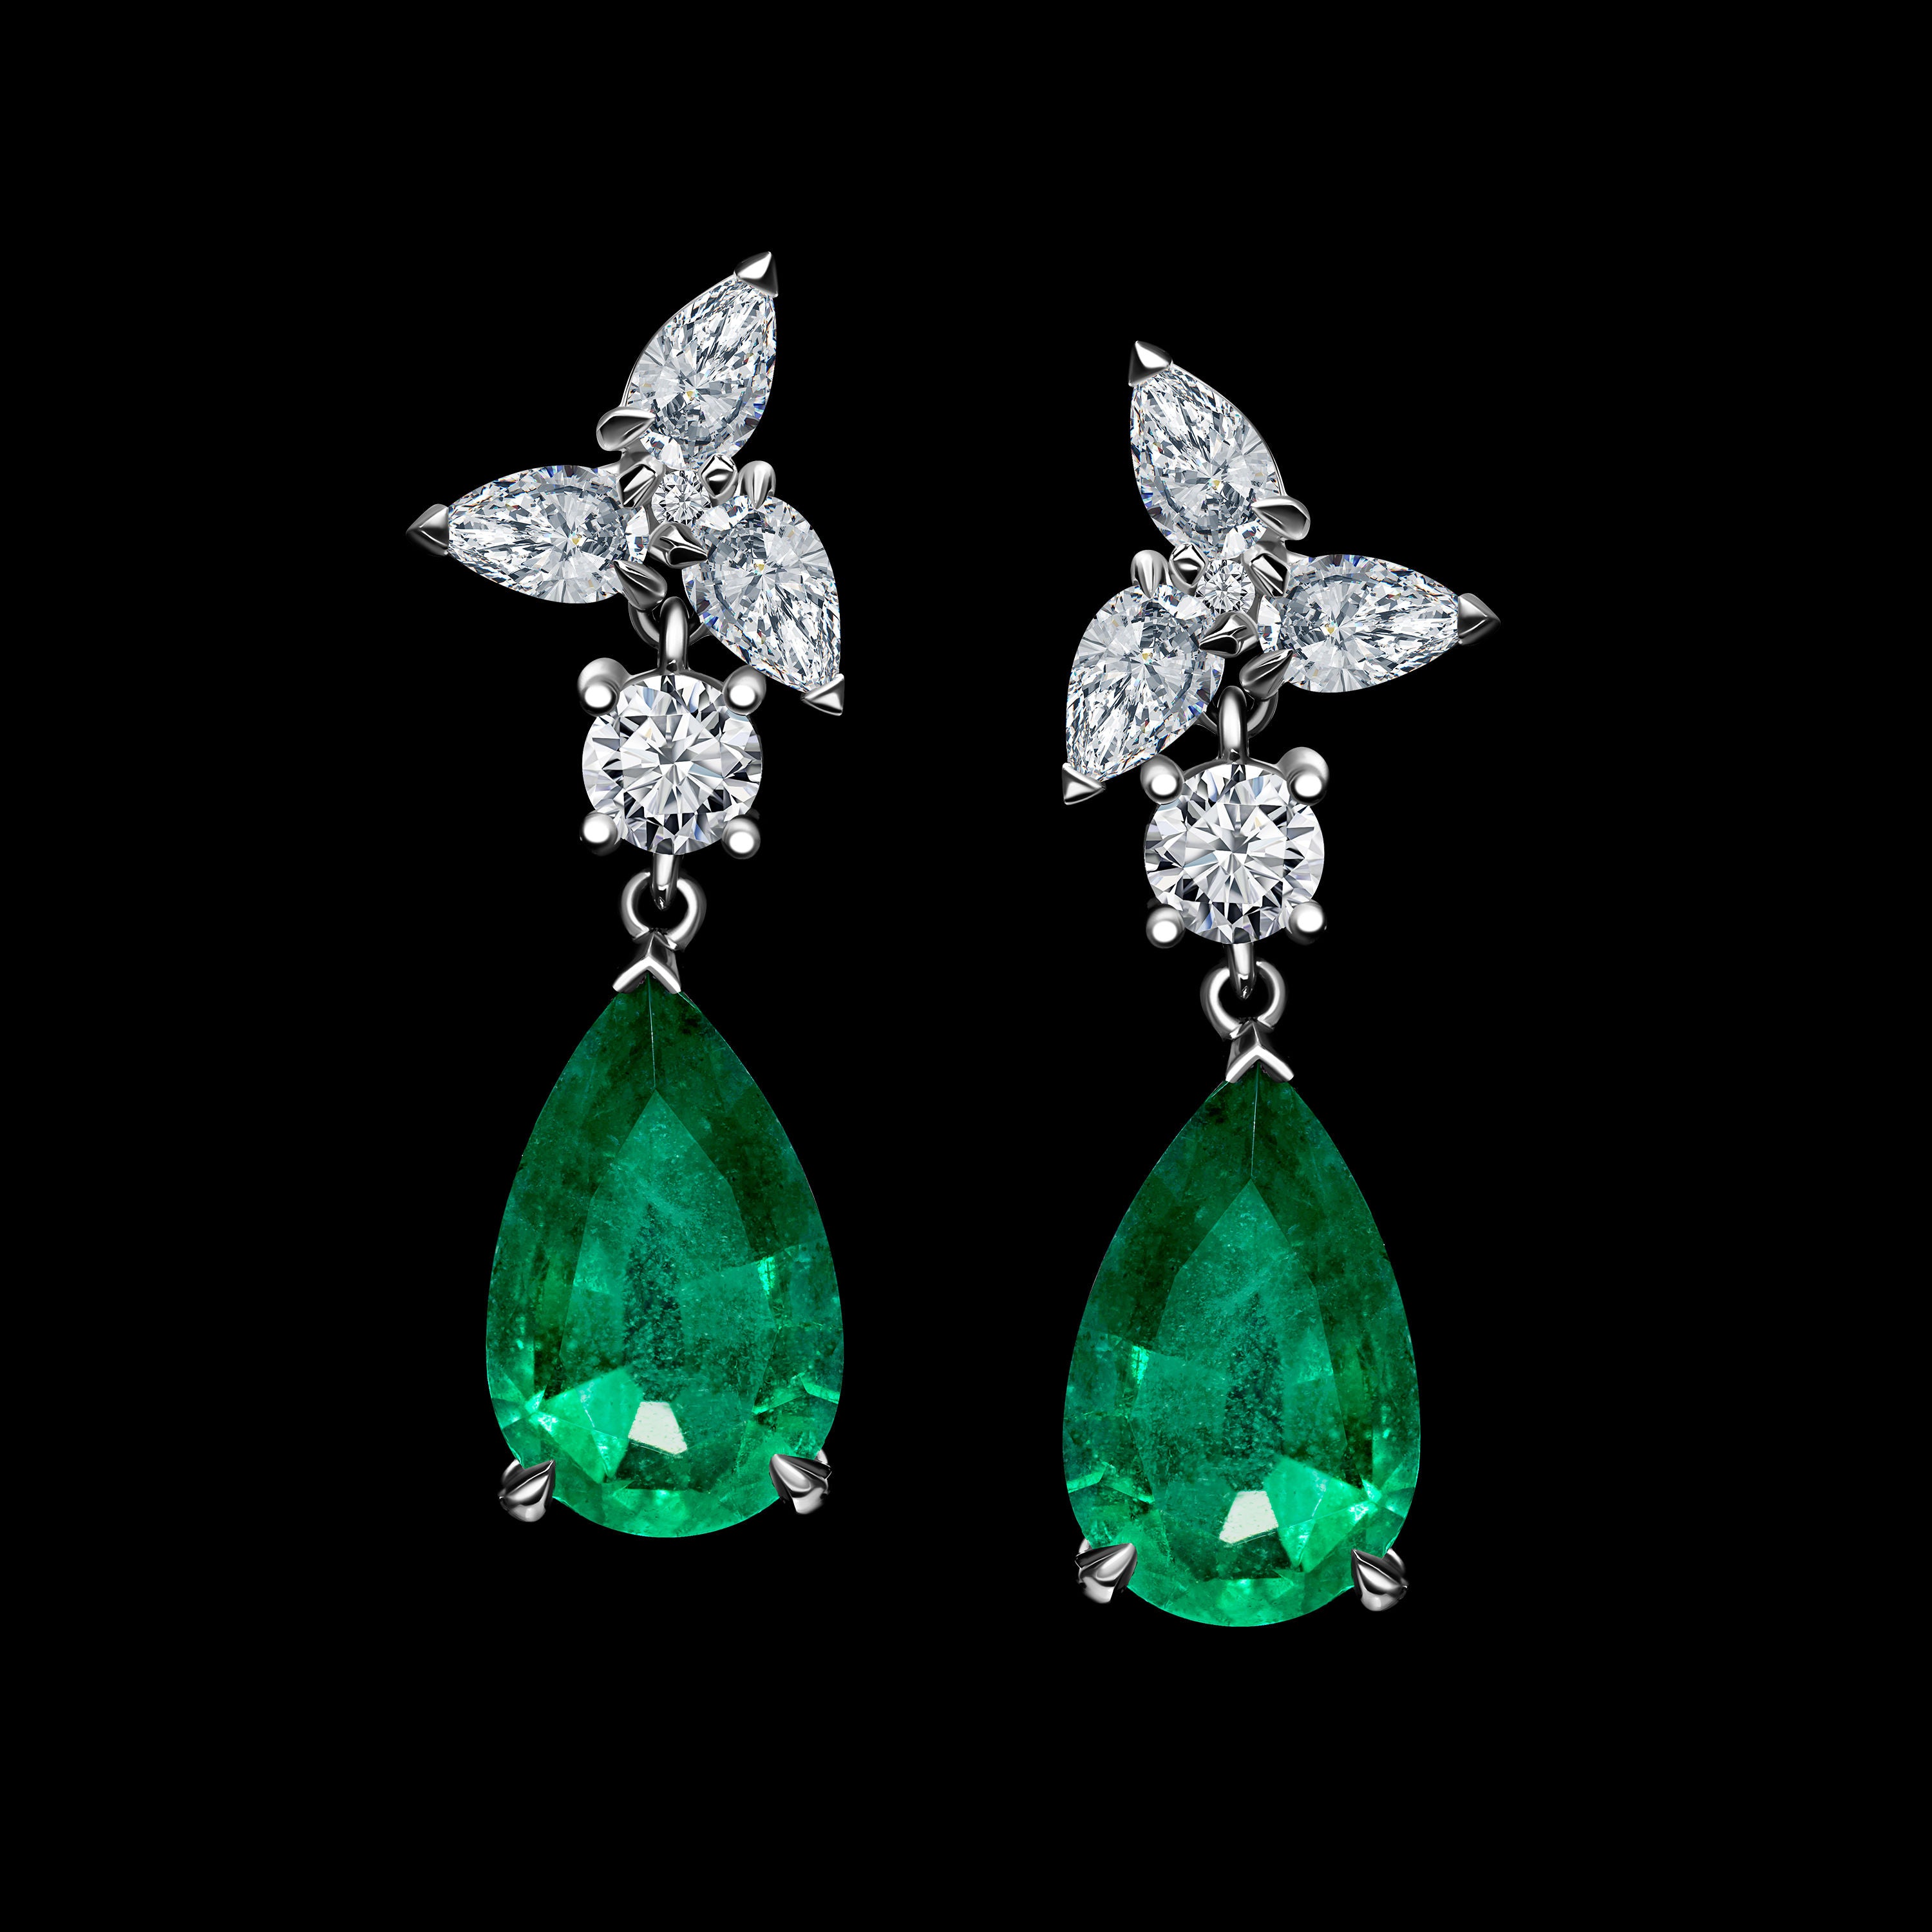 Emerald Drop Earrings with Diamonds - 2.69ct TW